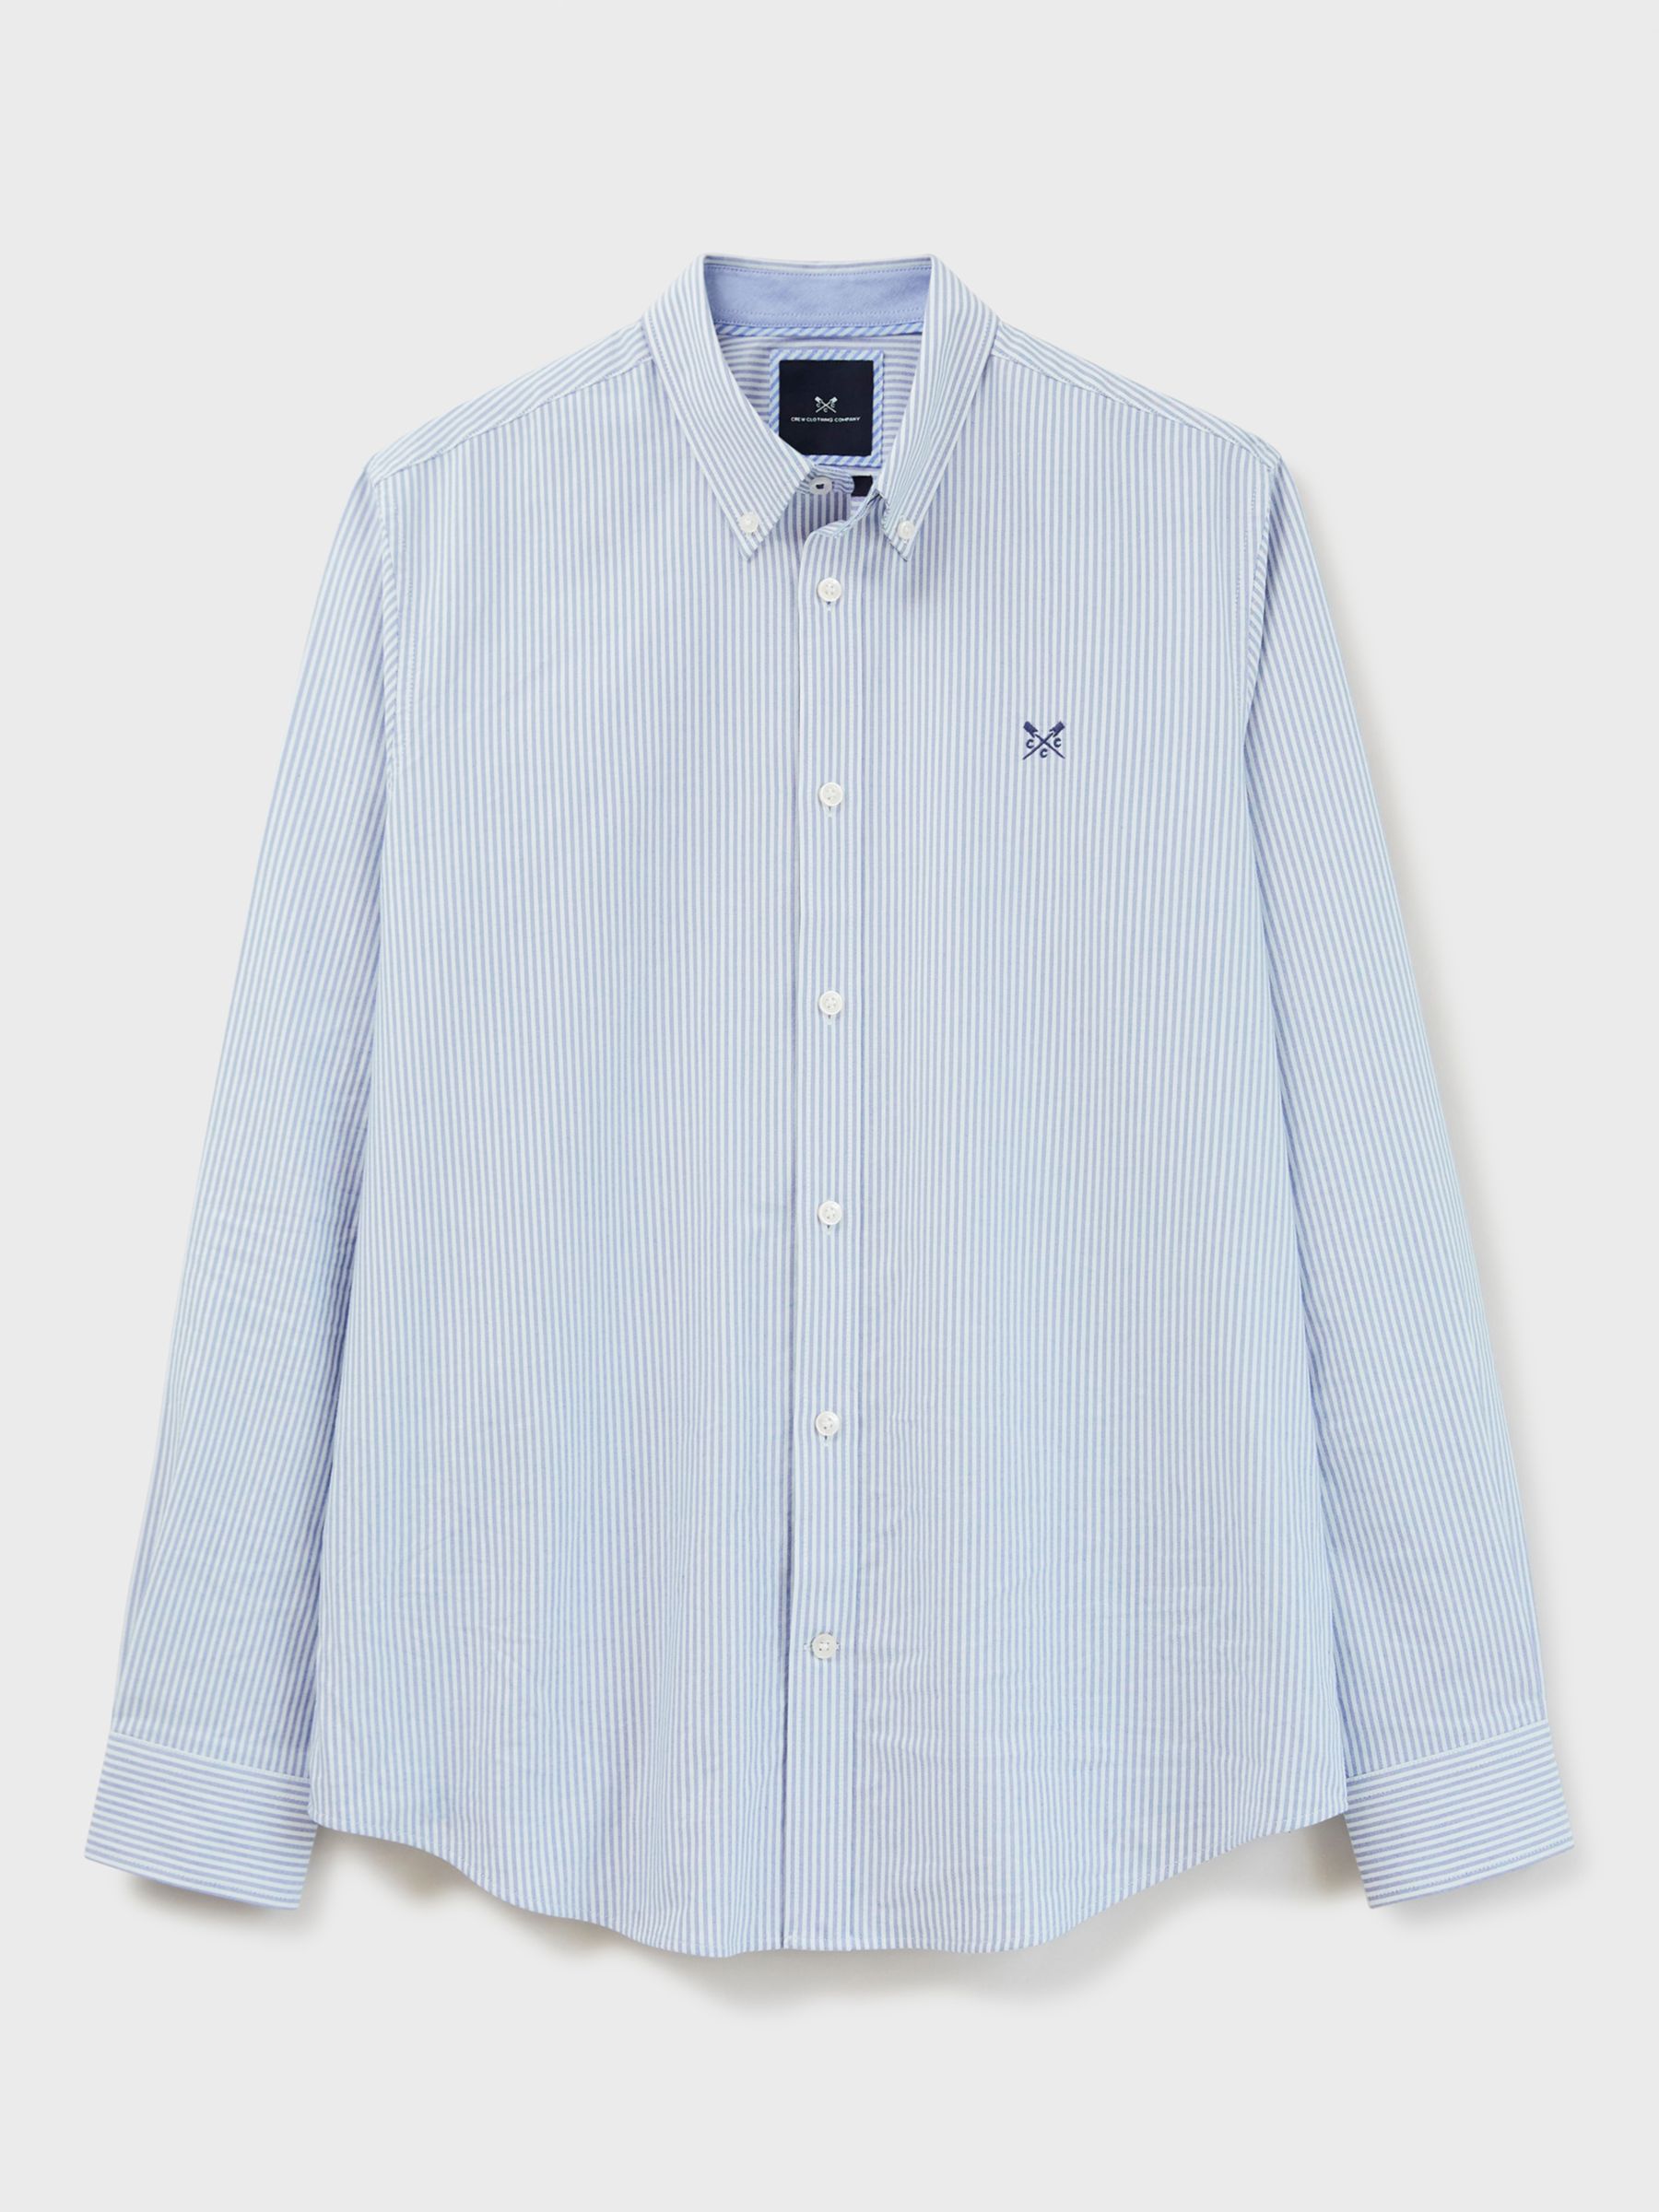 Crew Clothing Oxford Stripe Cotton Shirt, Blue, L